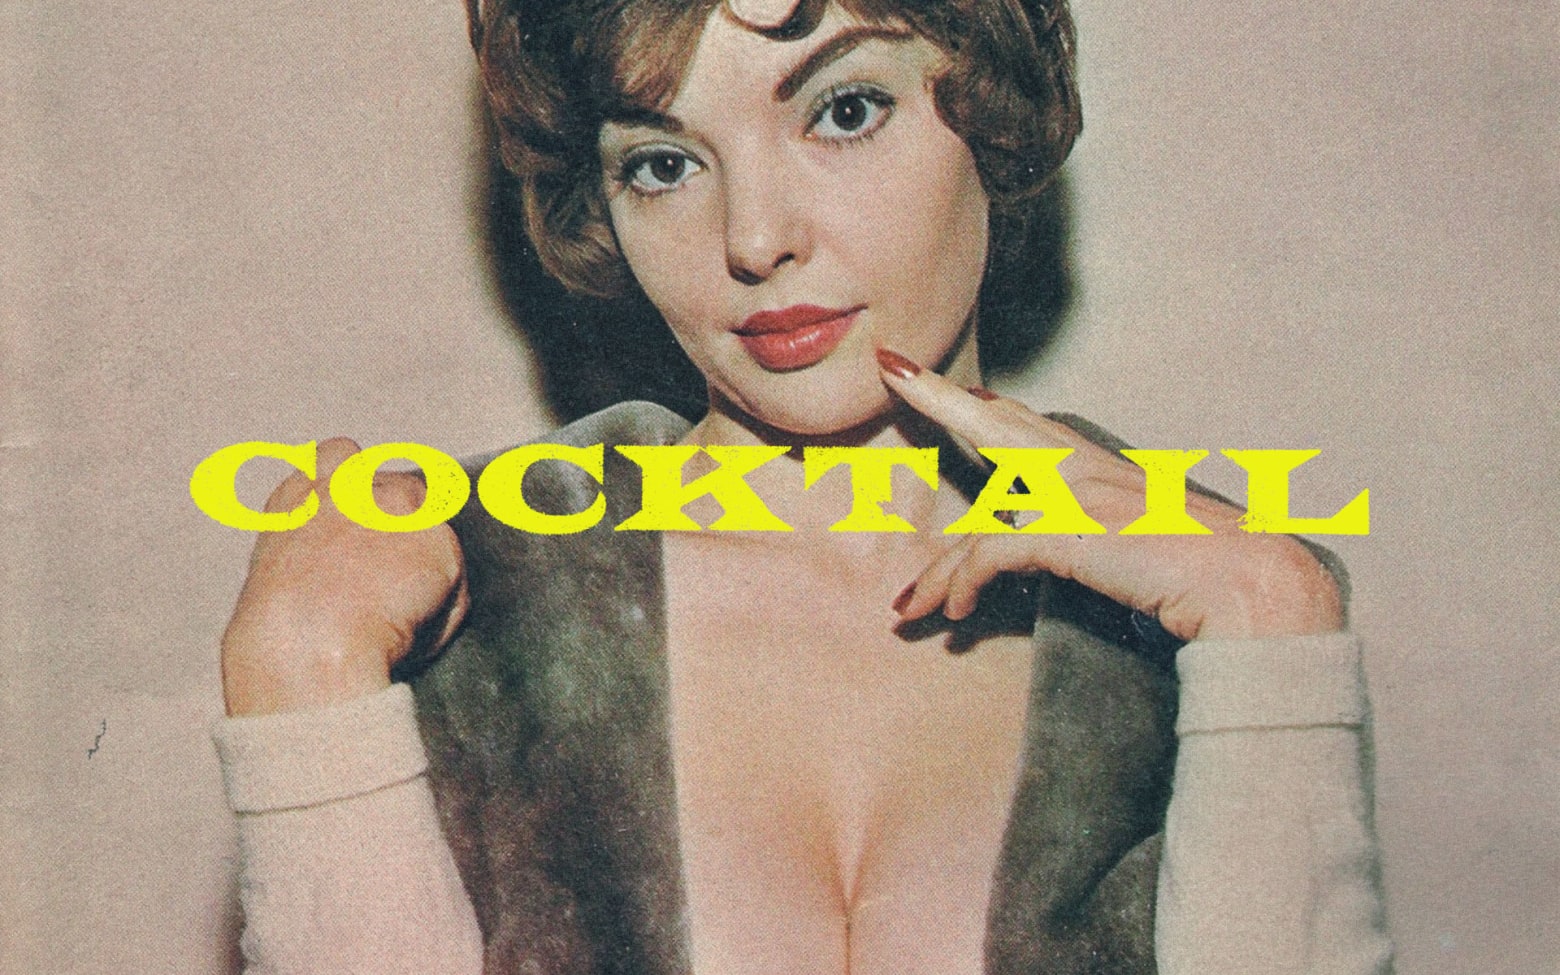 Vintage porn magazine sex